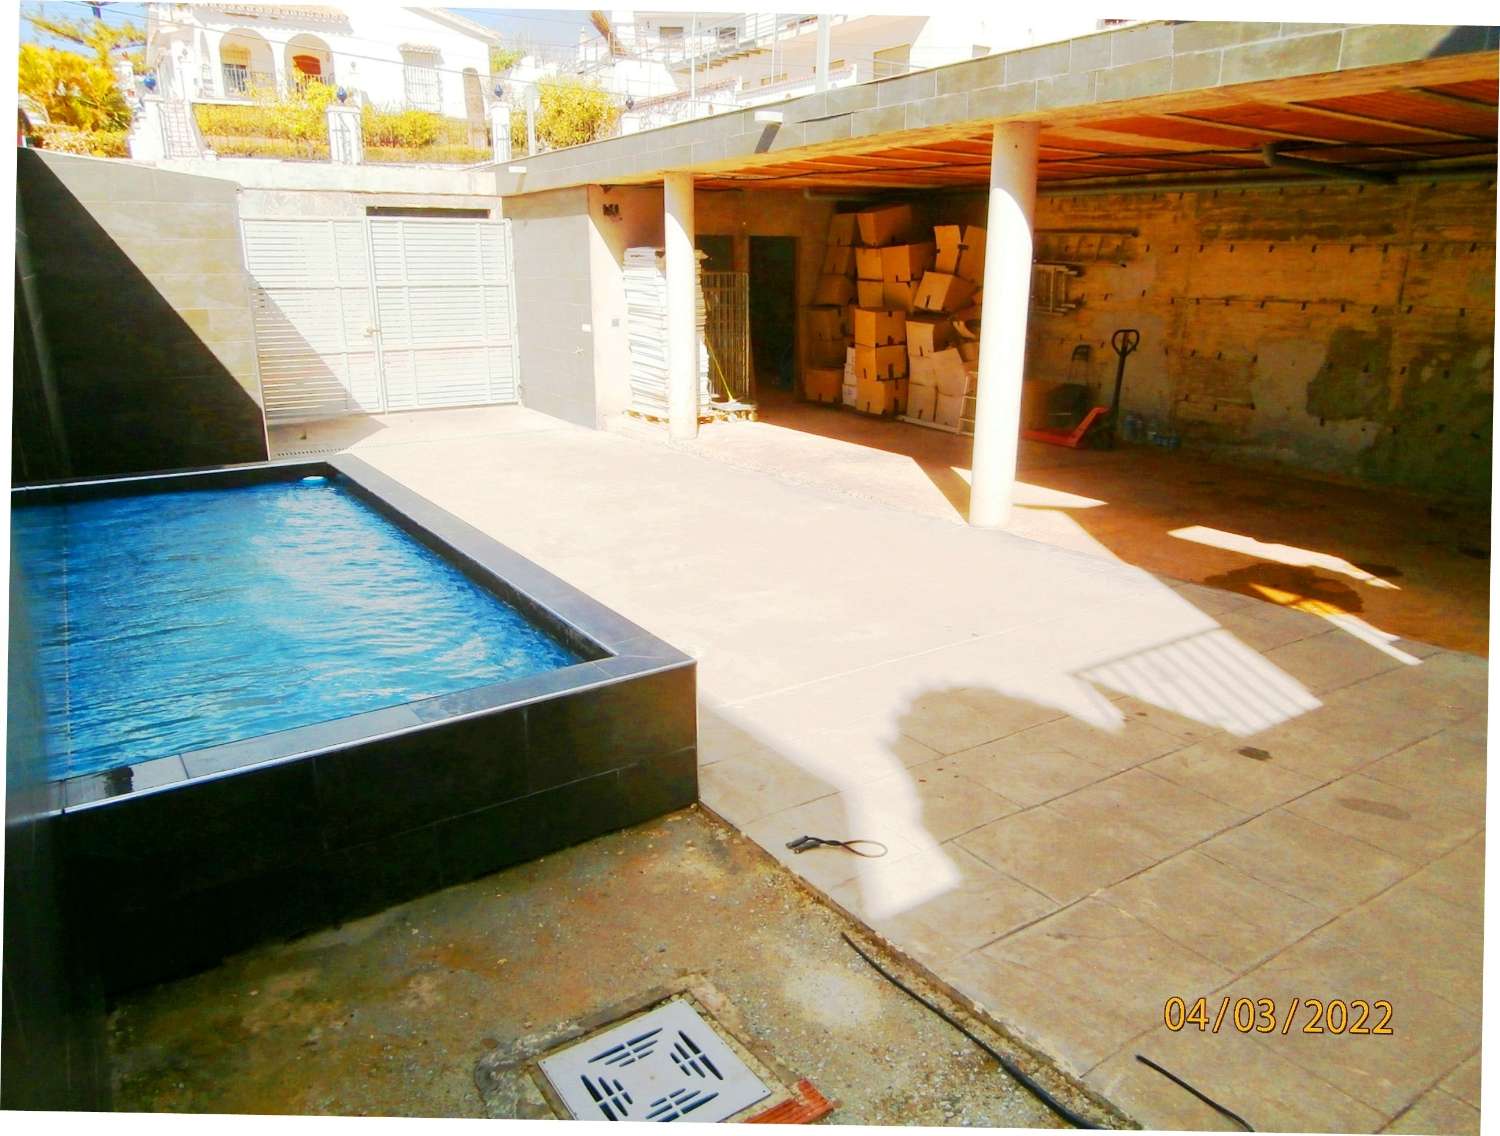 Freistehende Villa mit Pool, Meerblick, großes Potenzial, benötigt mehrere Oberflächen, ORIGINALPREIS 540.000 €.